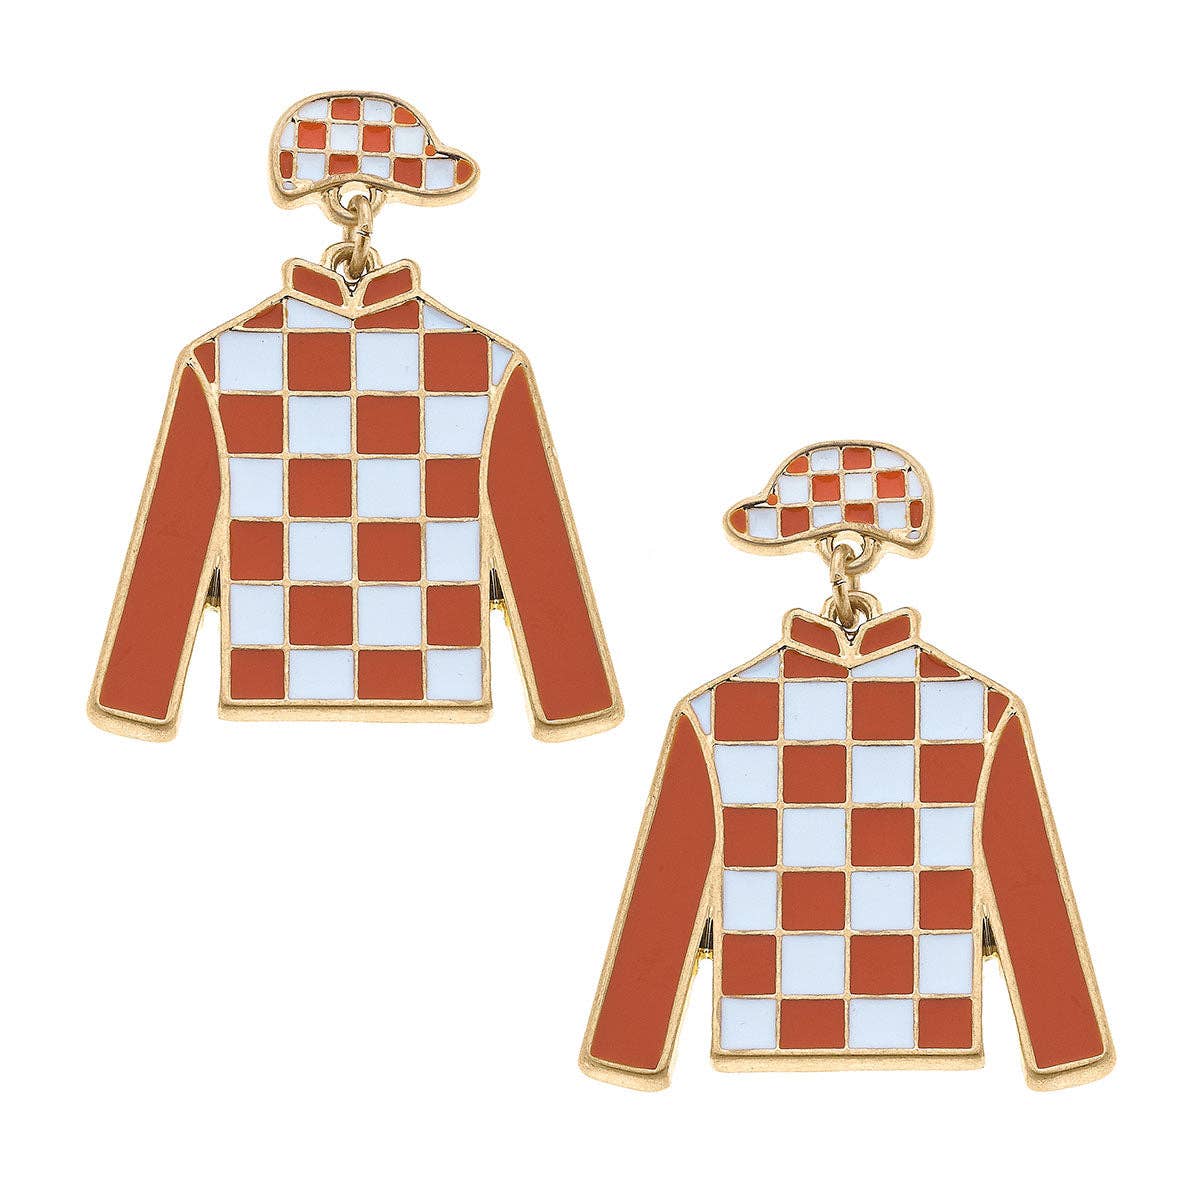 Quinn Enamel Jockey Earrings in Orange and White